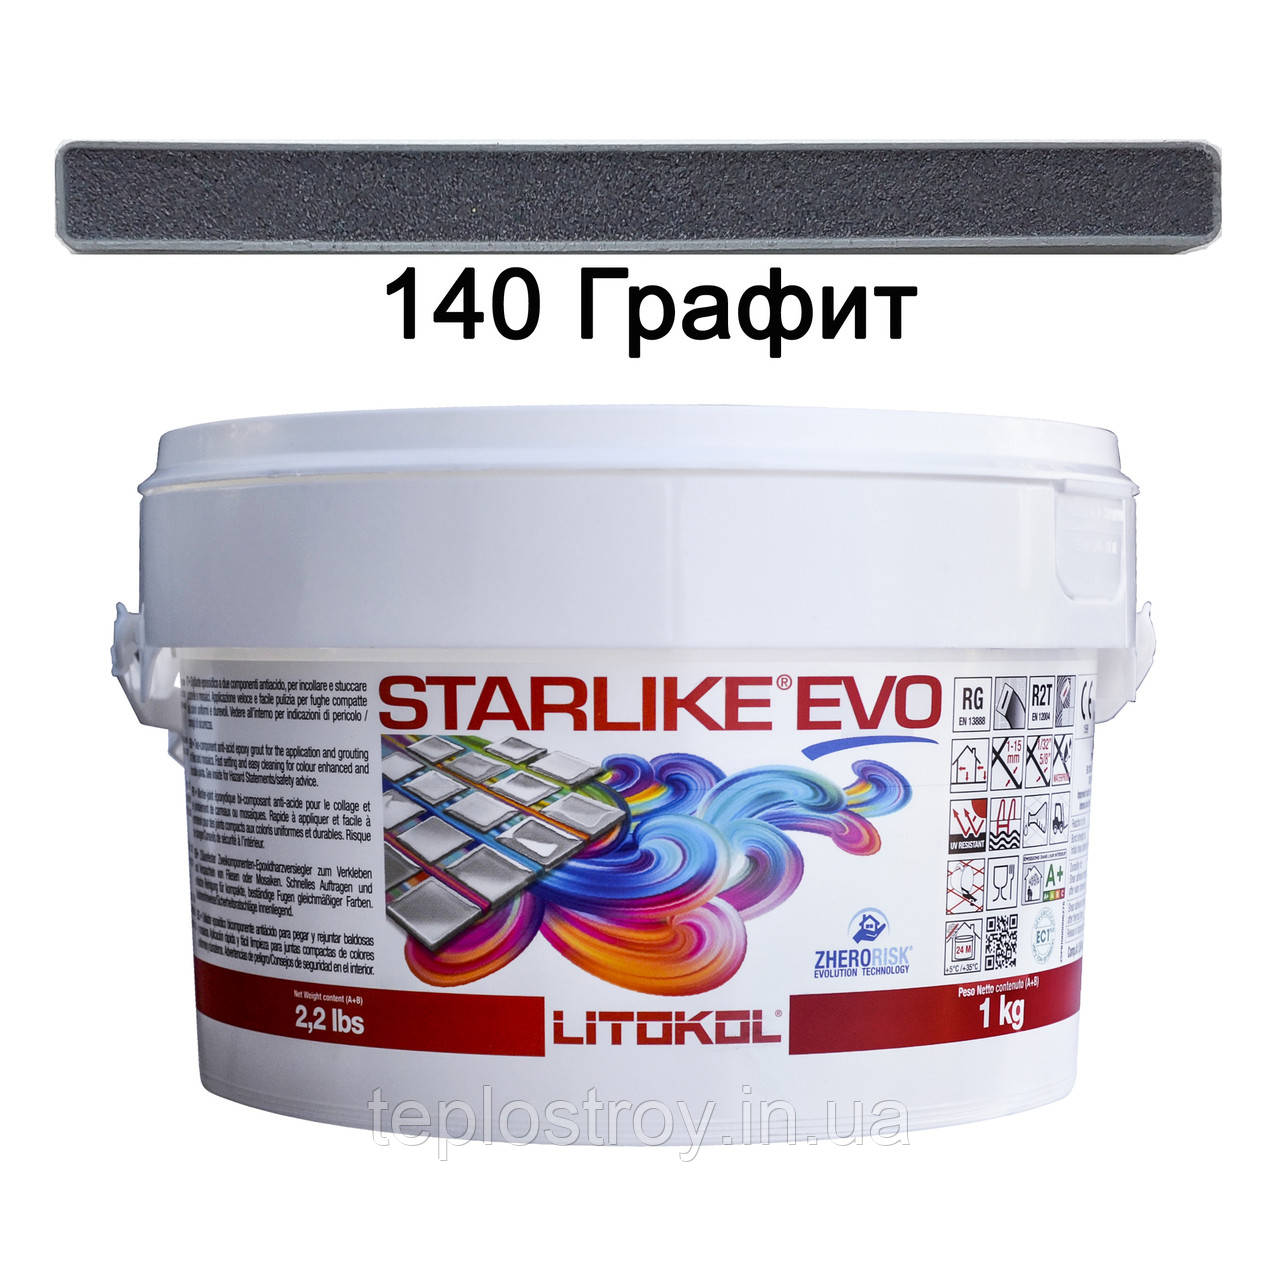 Епоксидна затирка Litokol Starlike EVO 140 (Графіт) CLASS COLD COLLECTION, 1 кг, фото 1